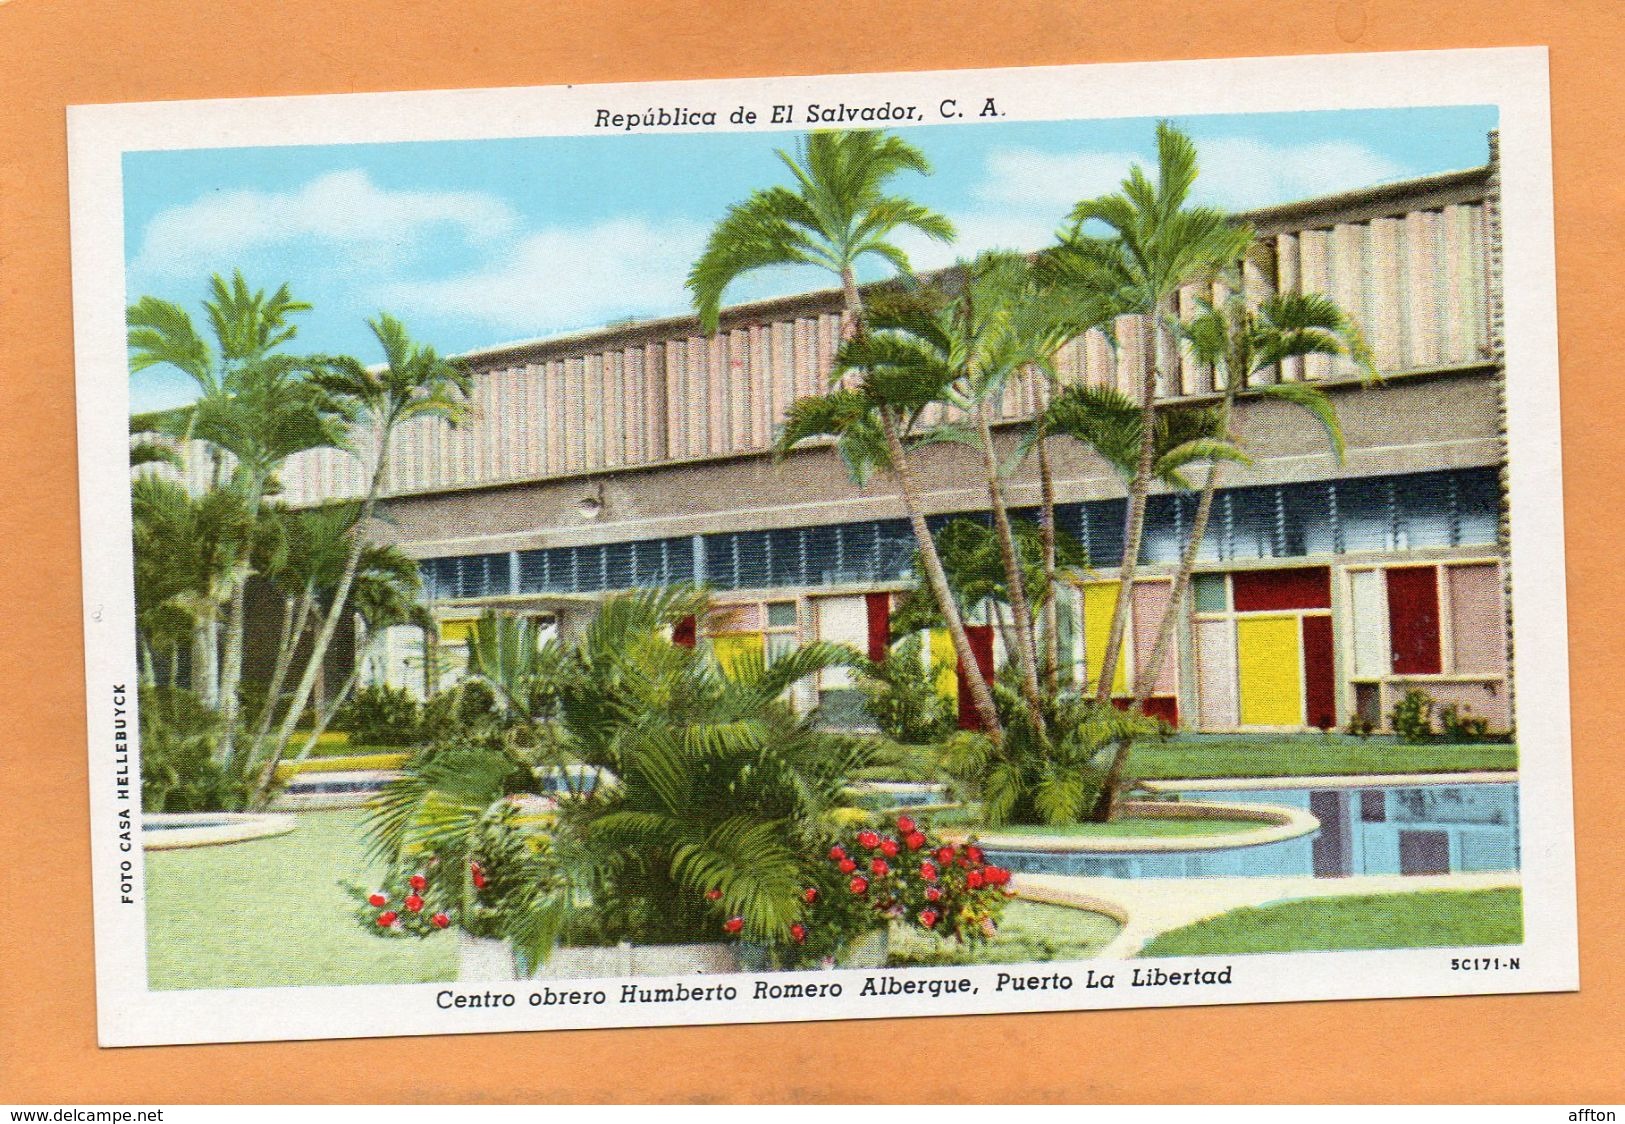 El Salvador 1940 Postcard - El Salvador